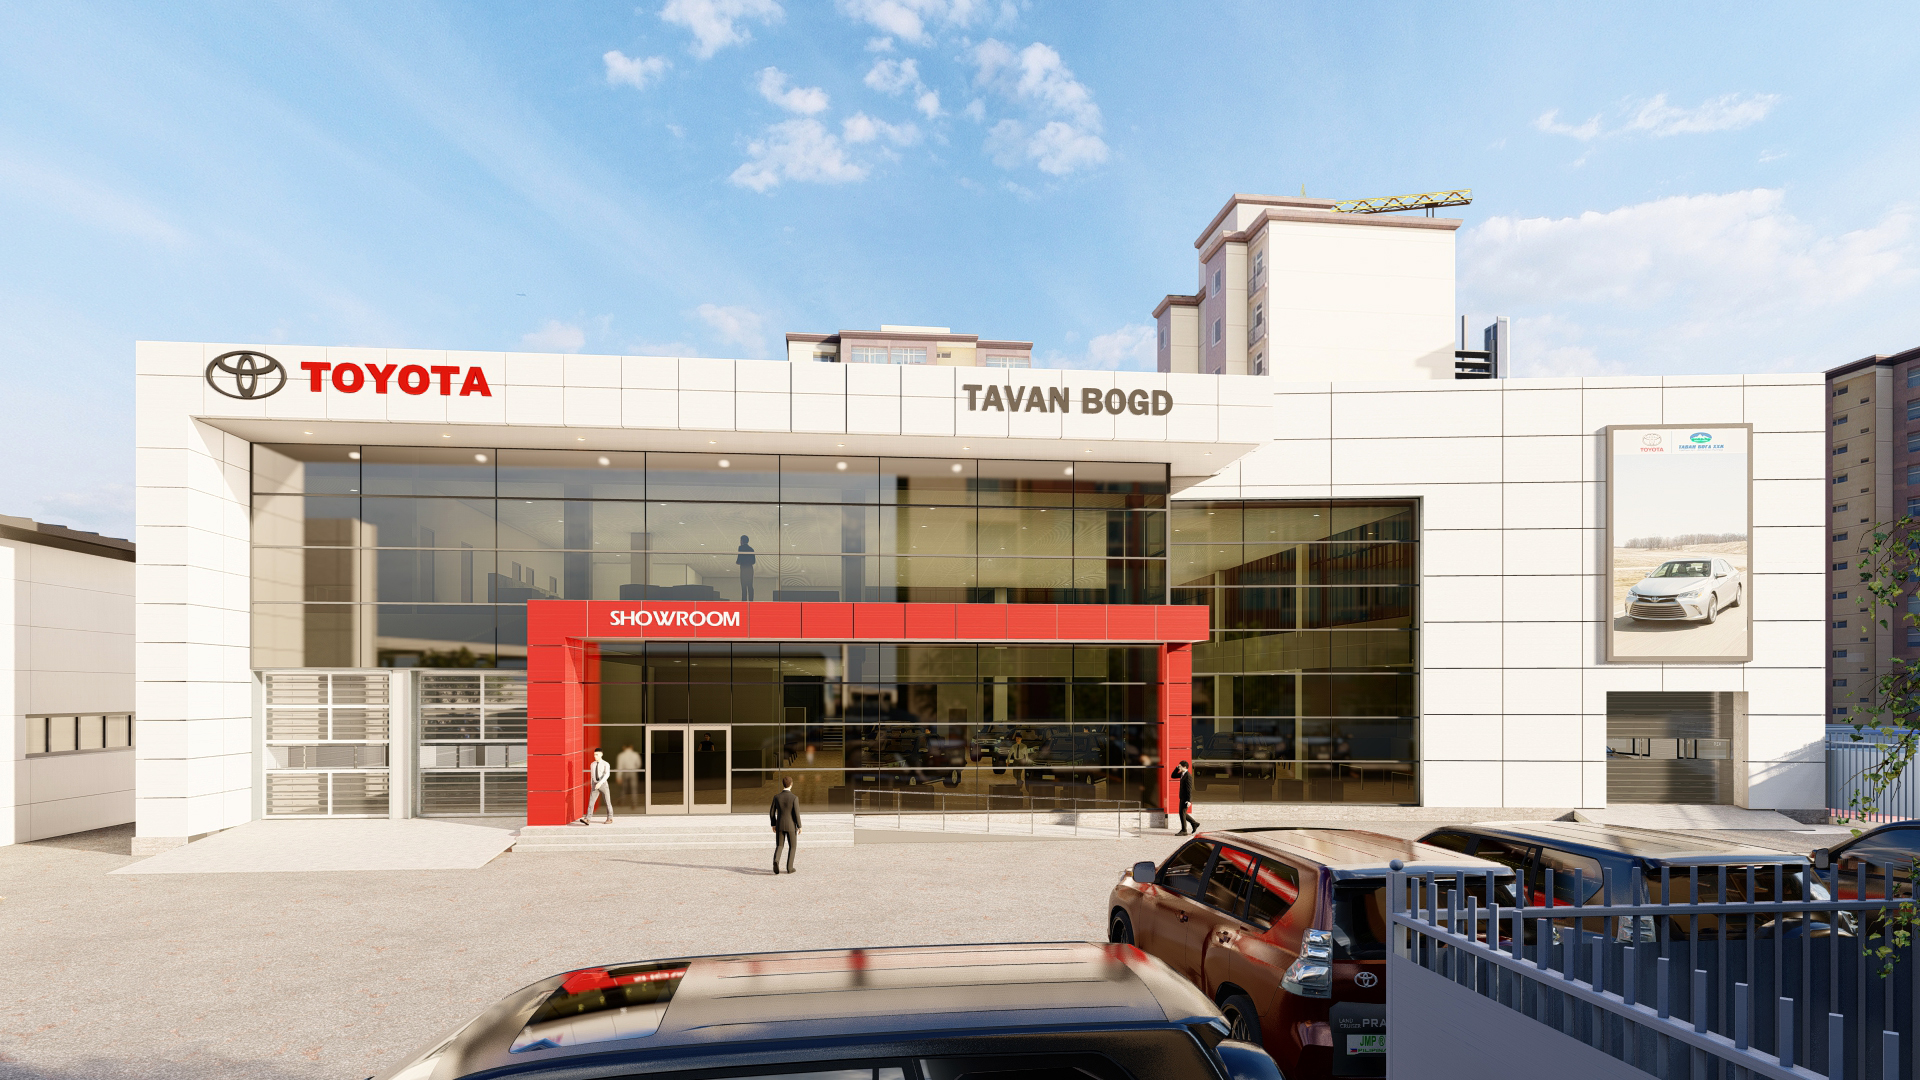 "Toyota" Showroom Mongolia